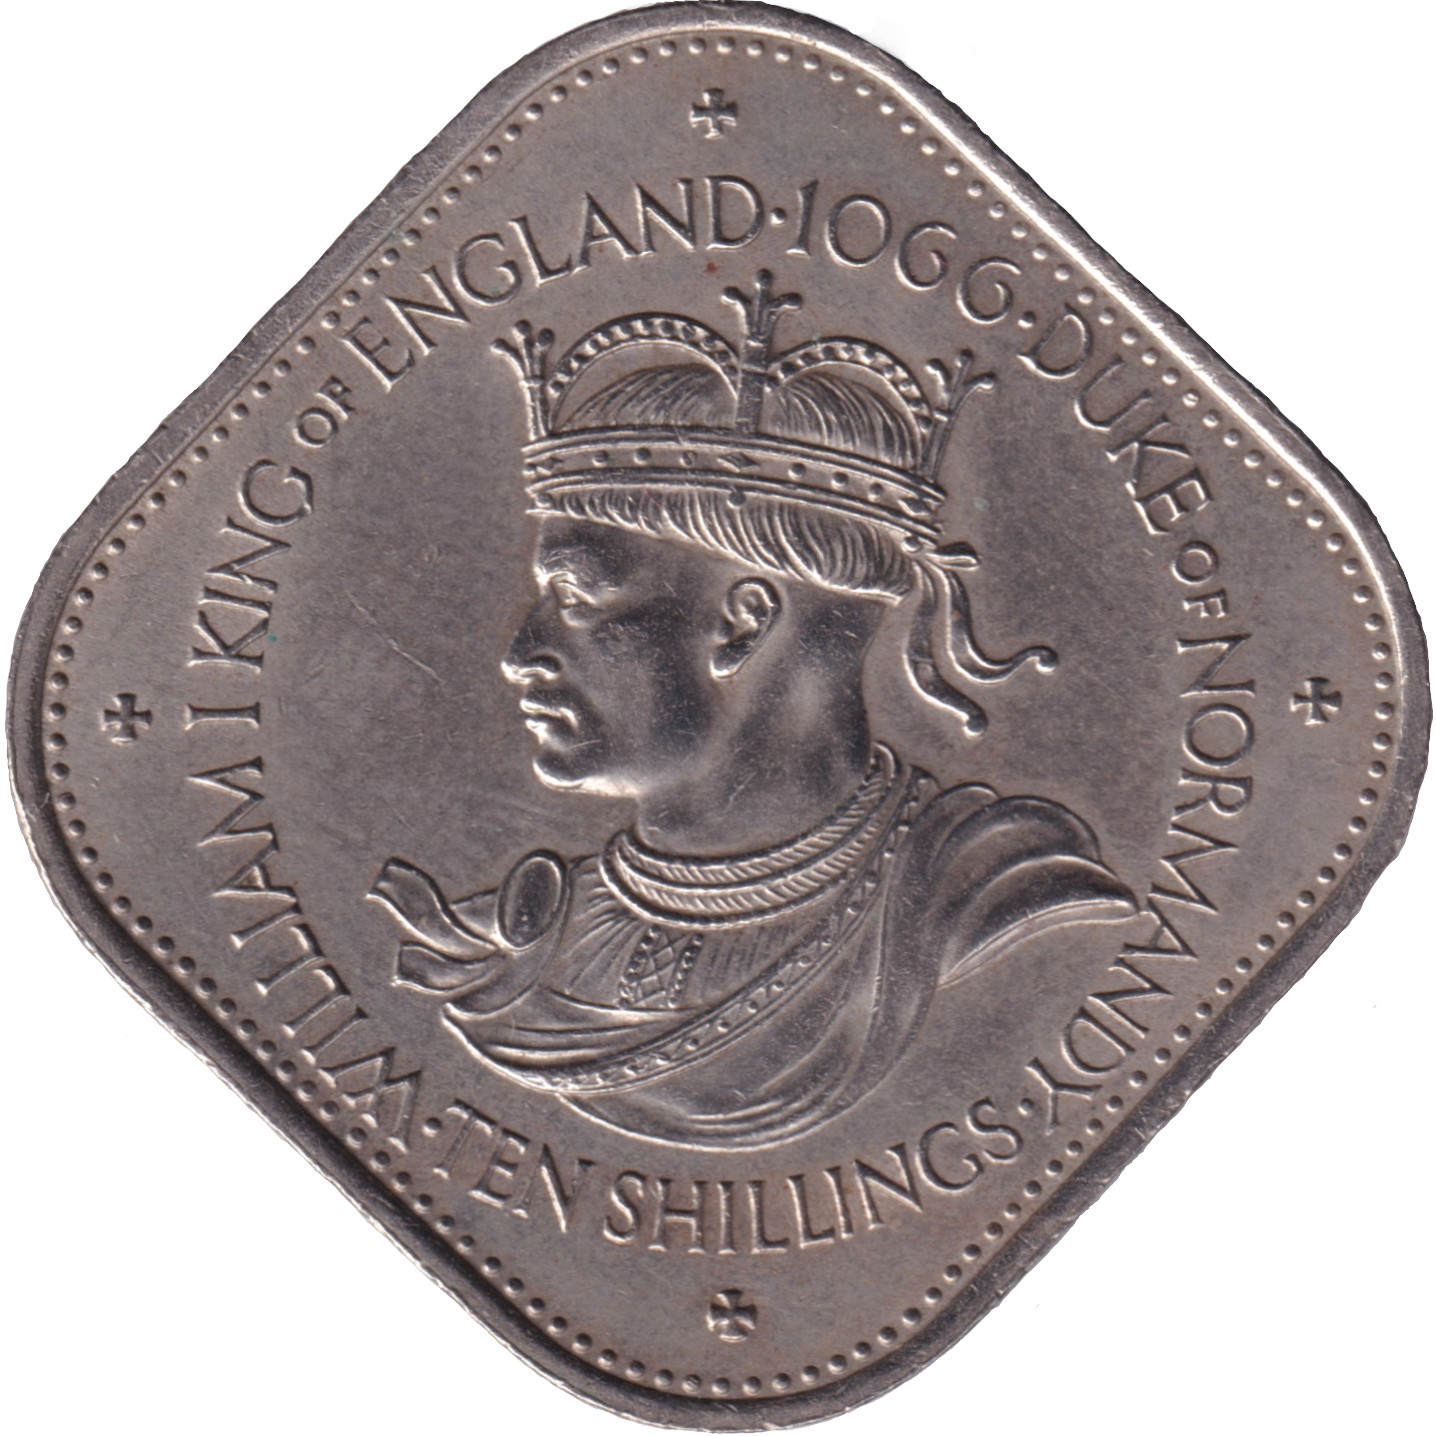 10 shilling - William I